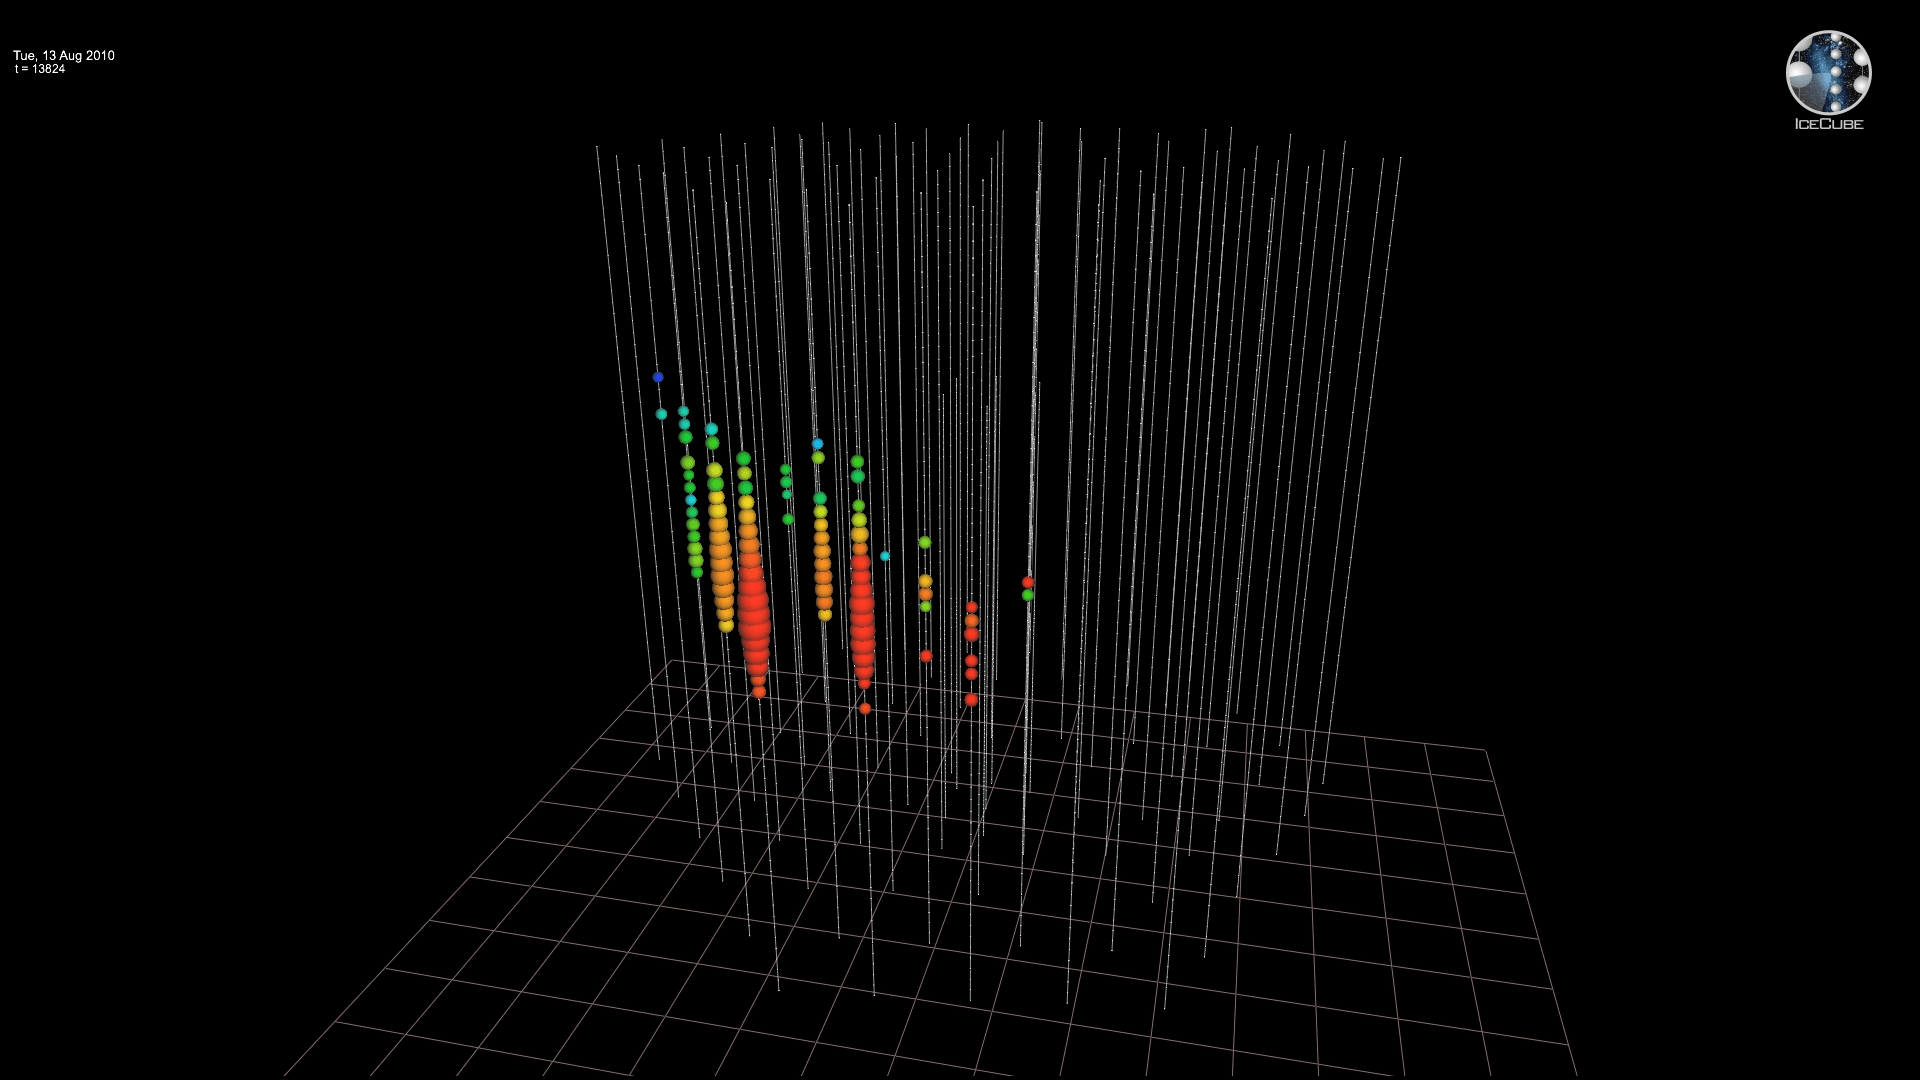 Video, IceCube Event ID 116357,6324295. Most probable neutrino energy: 1.7 PeV, August 13, 2010